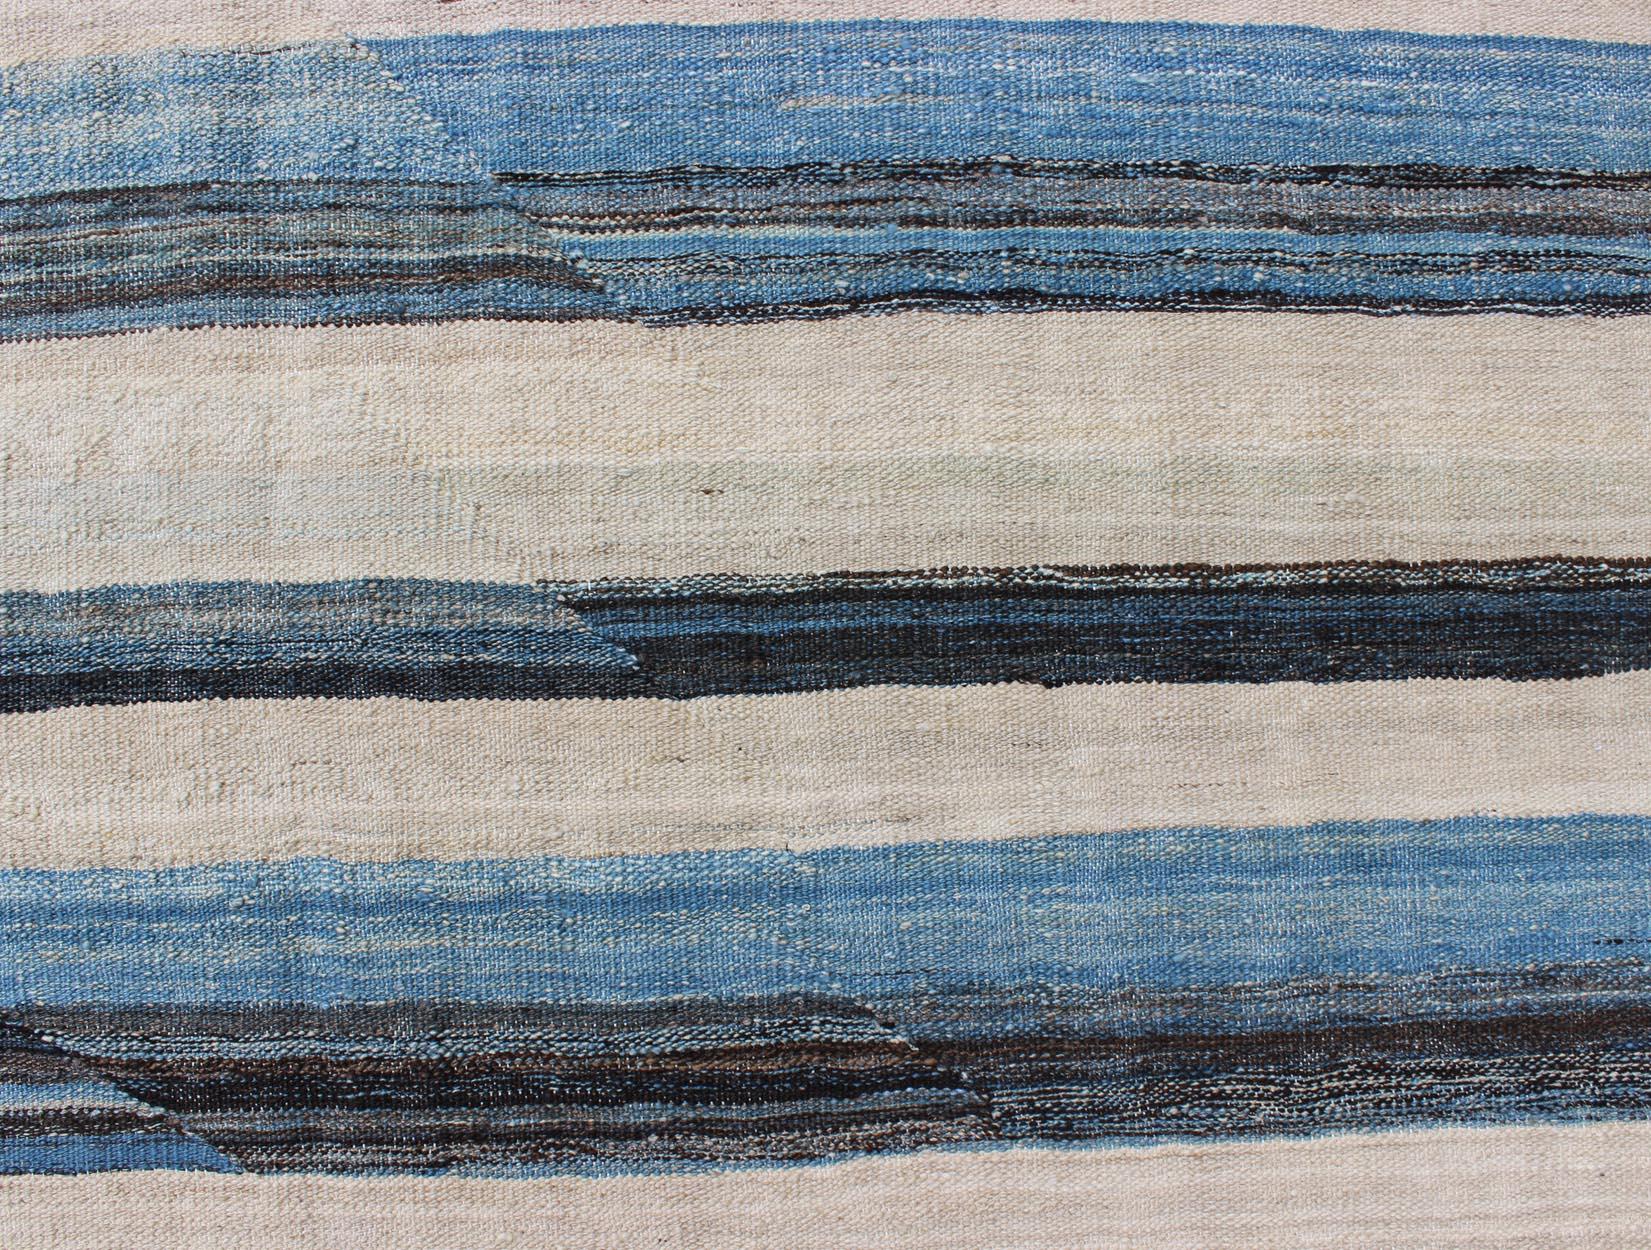 Afghan Flat-Weave Kilim Rug with Classic Stripe Design in Blue, Ivory, Charcoal